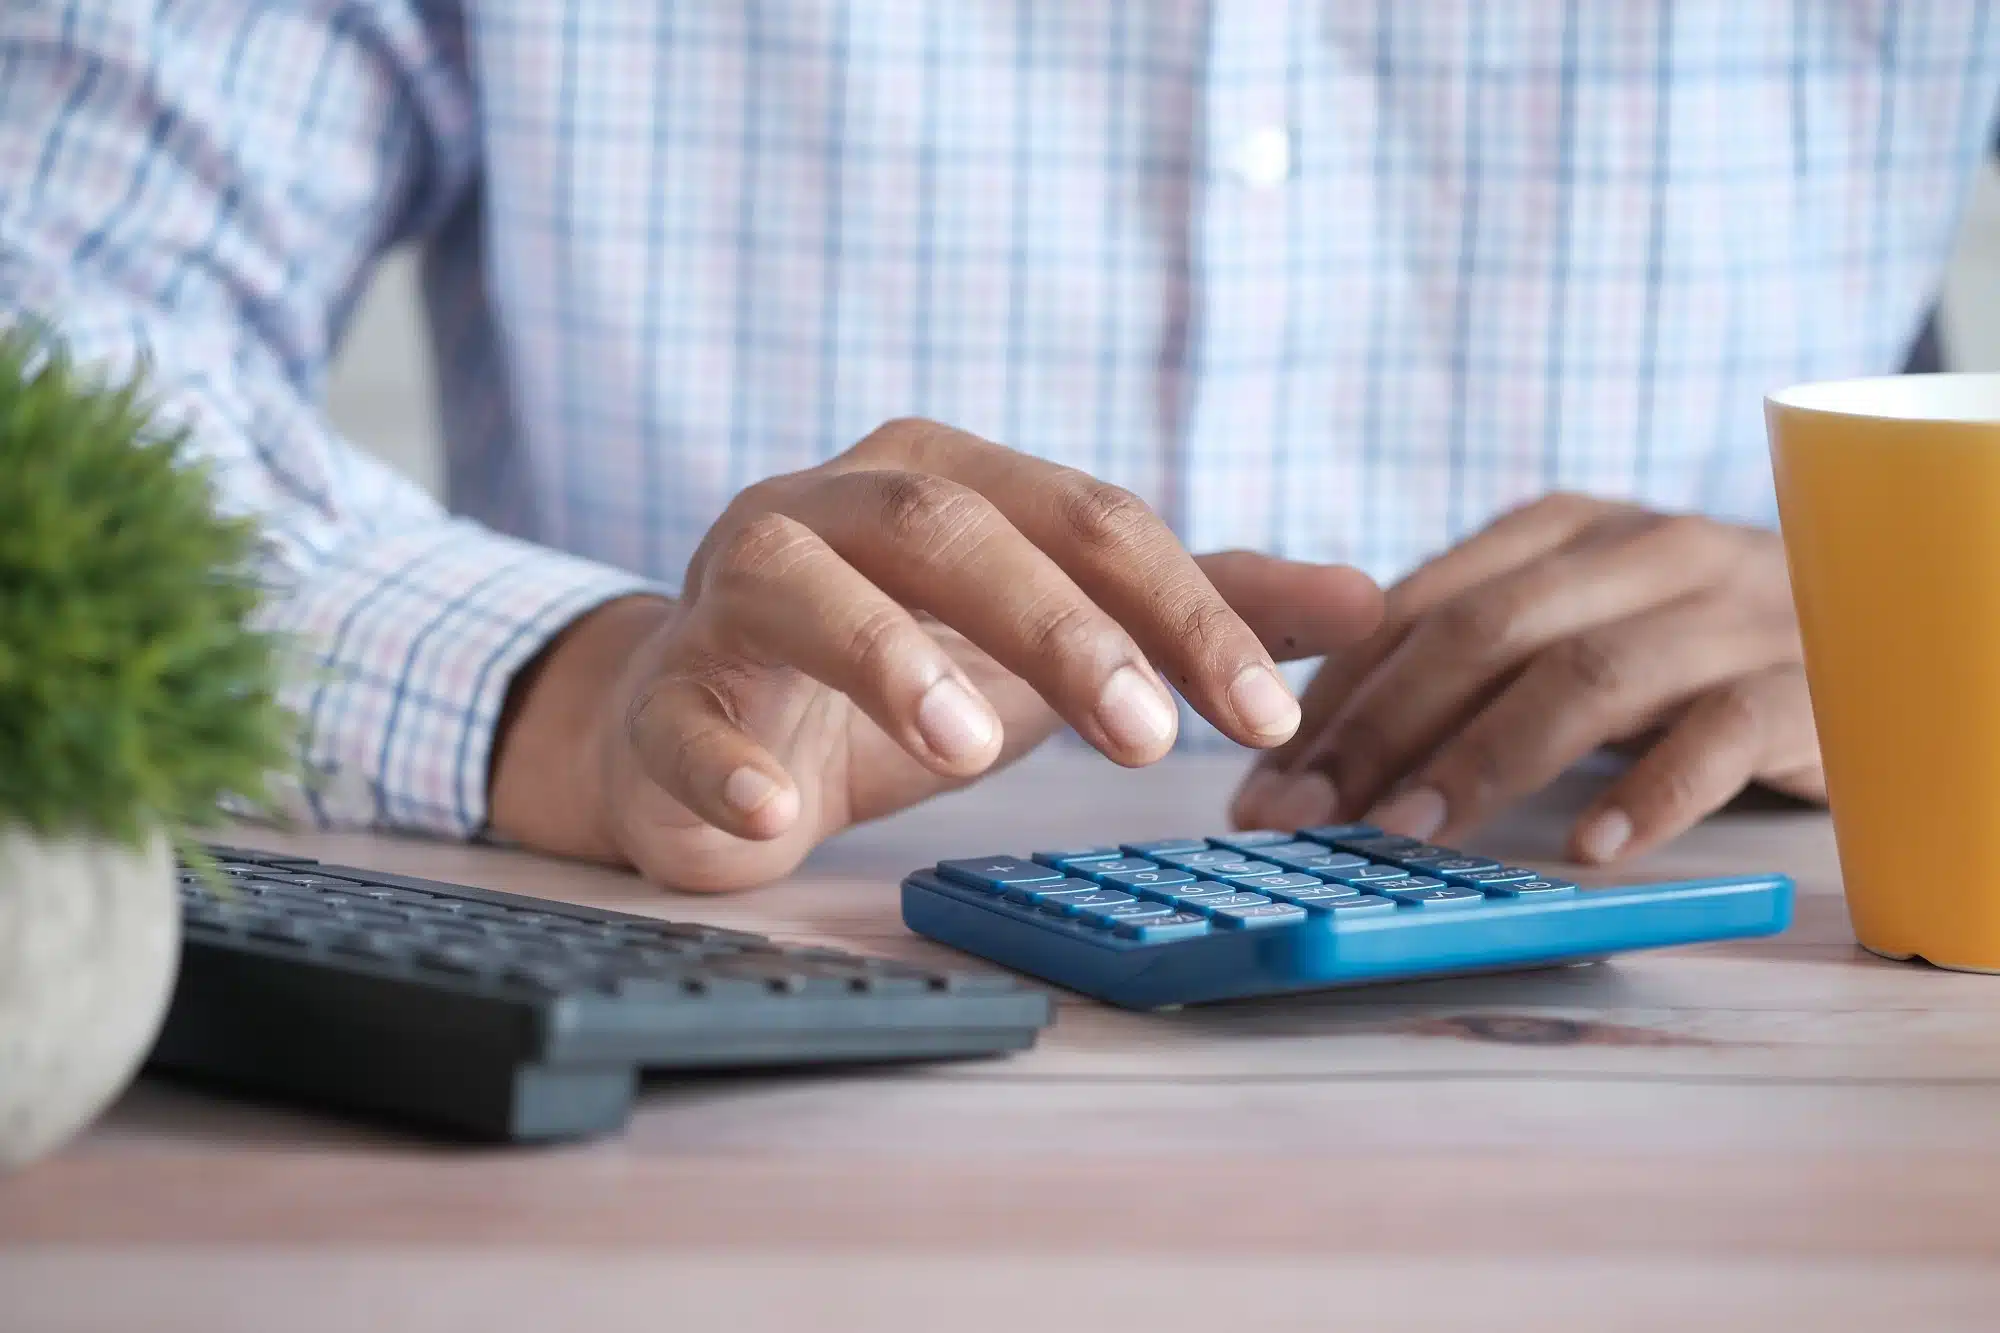 A man using a calculator representing the concept of FBT rebate.